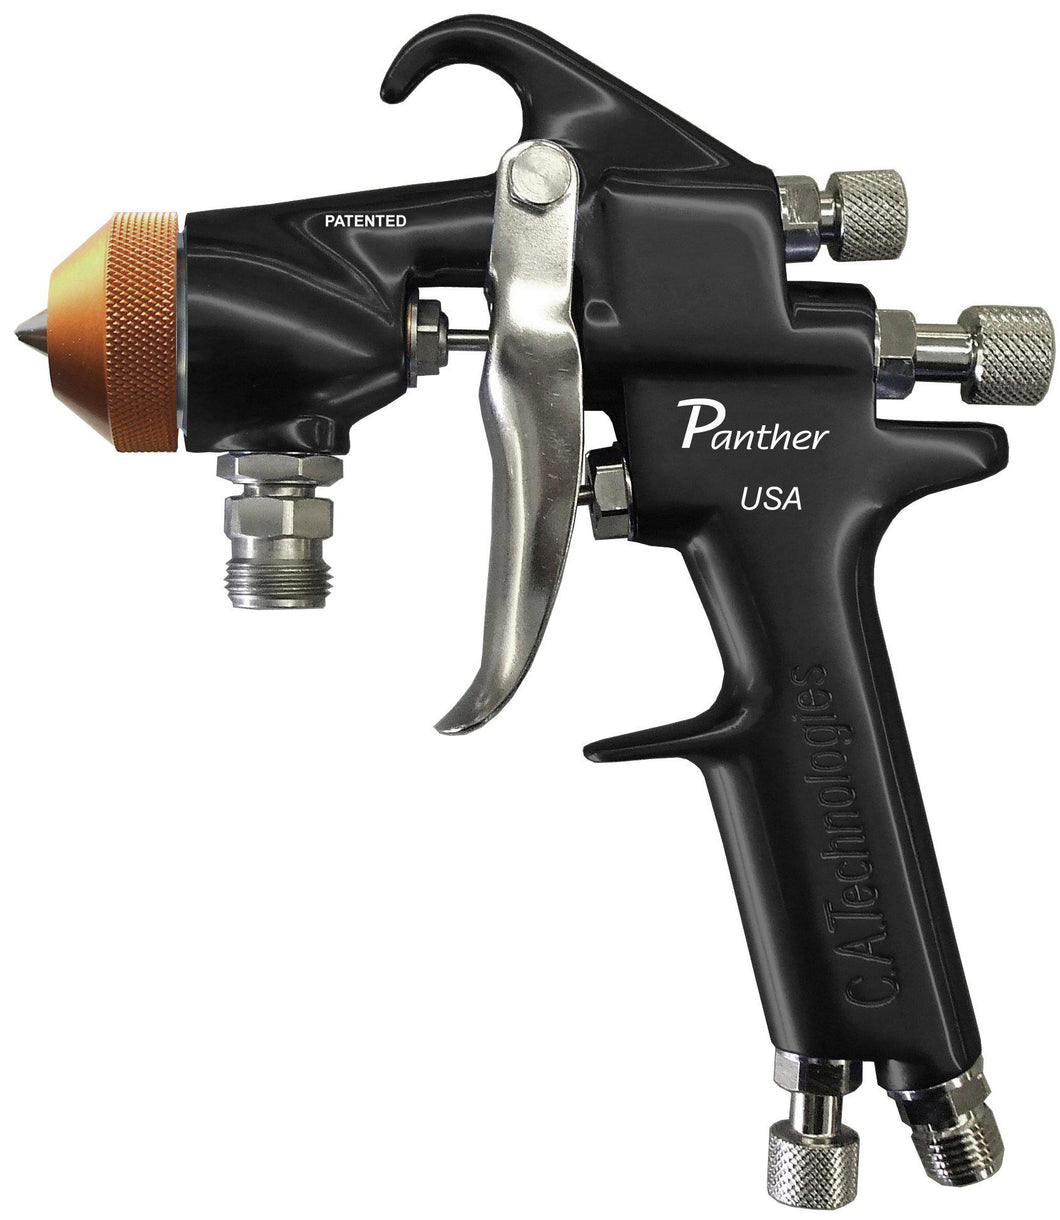 C.A Technologies Panther 100G 1590 Teflon Coated Spray Gun (1.8 X 1590)